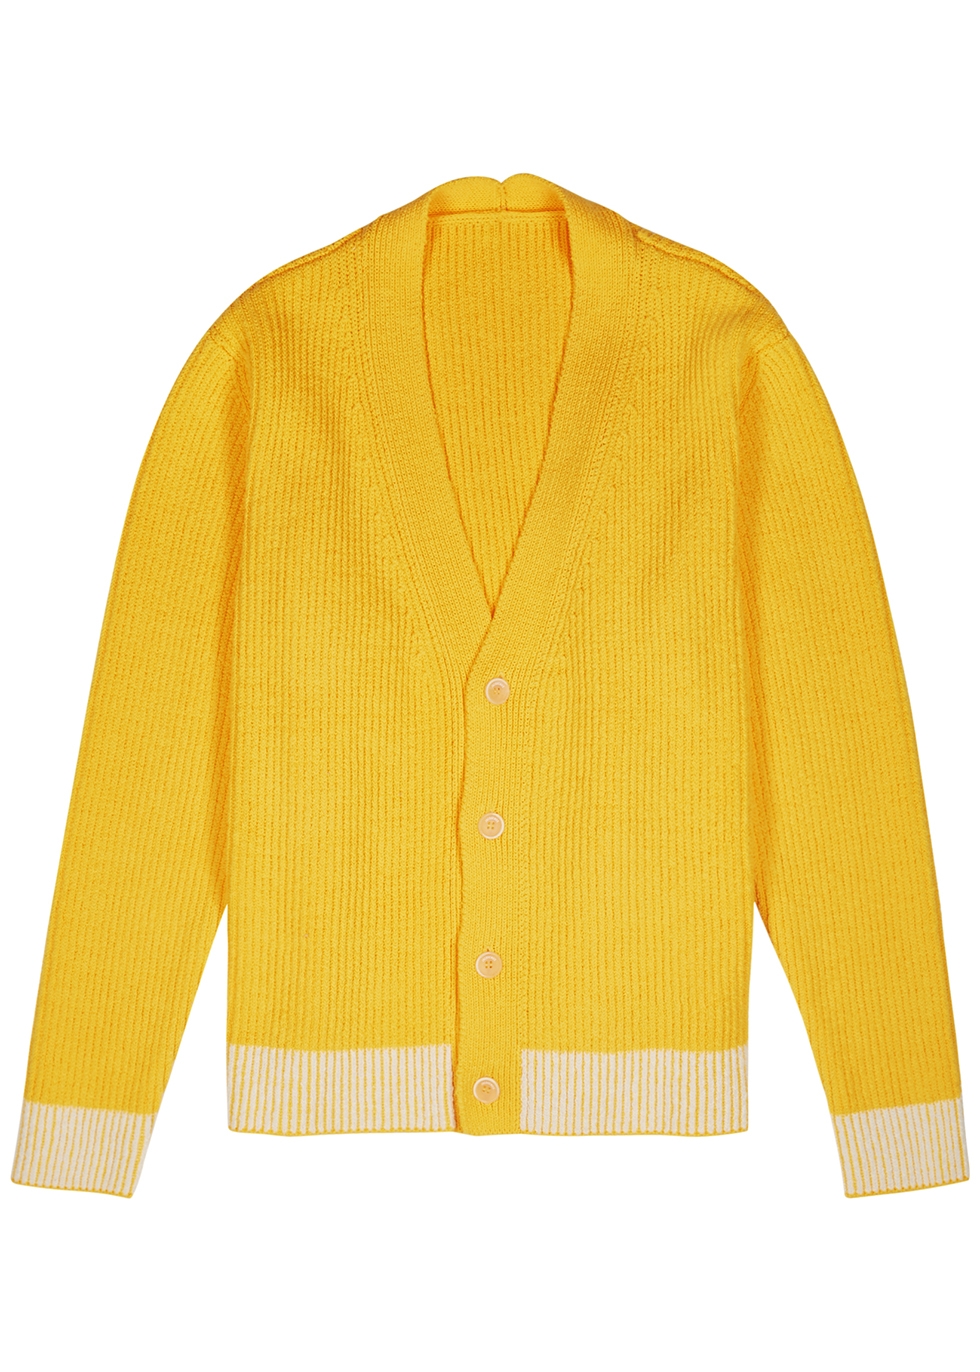 Jacquemus Le Cardigan Limone yellow ribbed-knit cardigan - Harvey Nichols